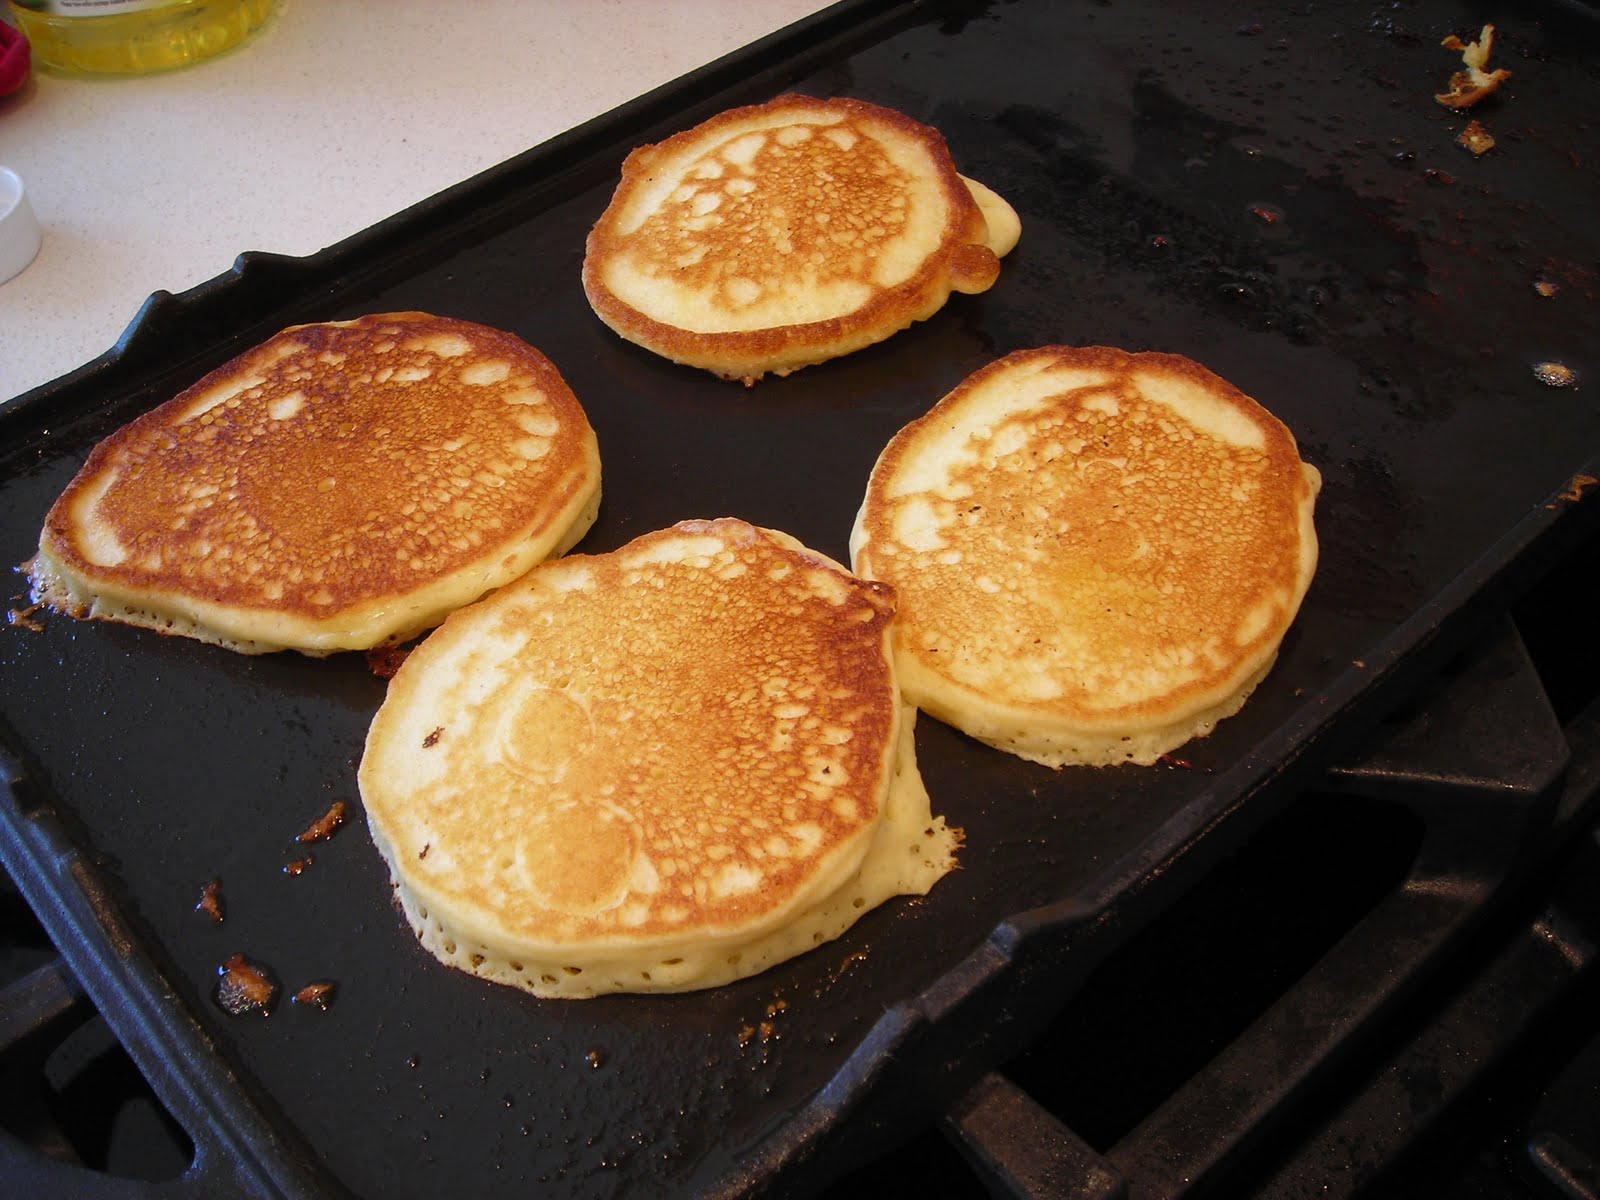 http://2.bp.blogspot.com/-usIDAe2_5KQ/TkRM3F__GCI/AAAAAAAABIo/ejVX05OEmd4/s1600/pancakes.JPG